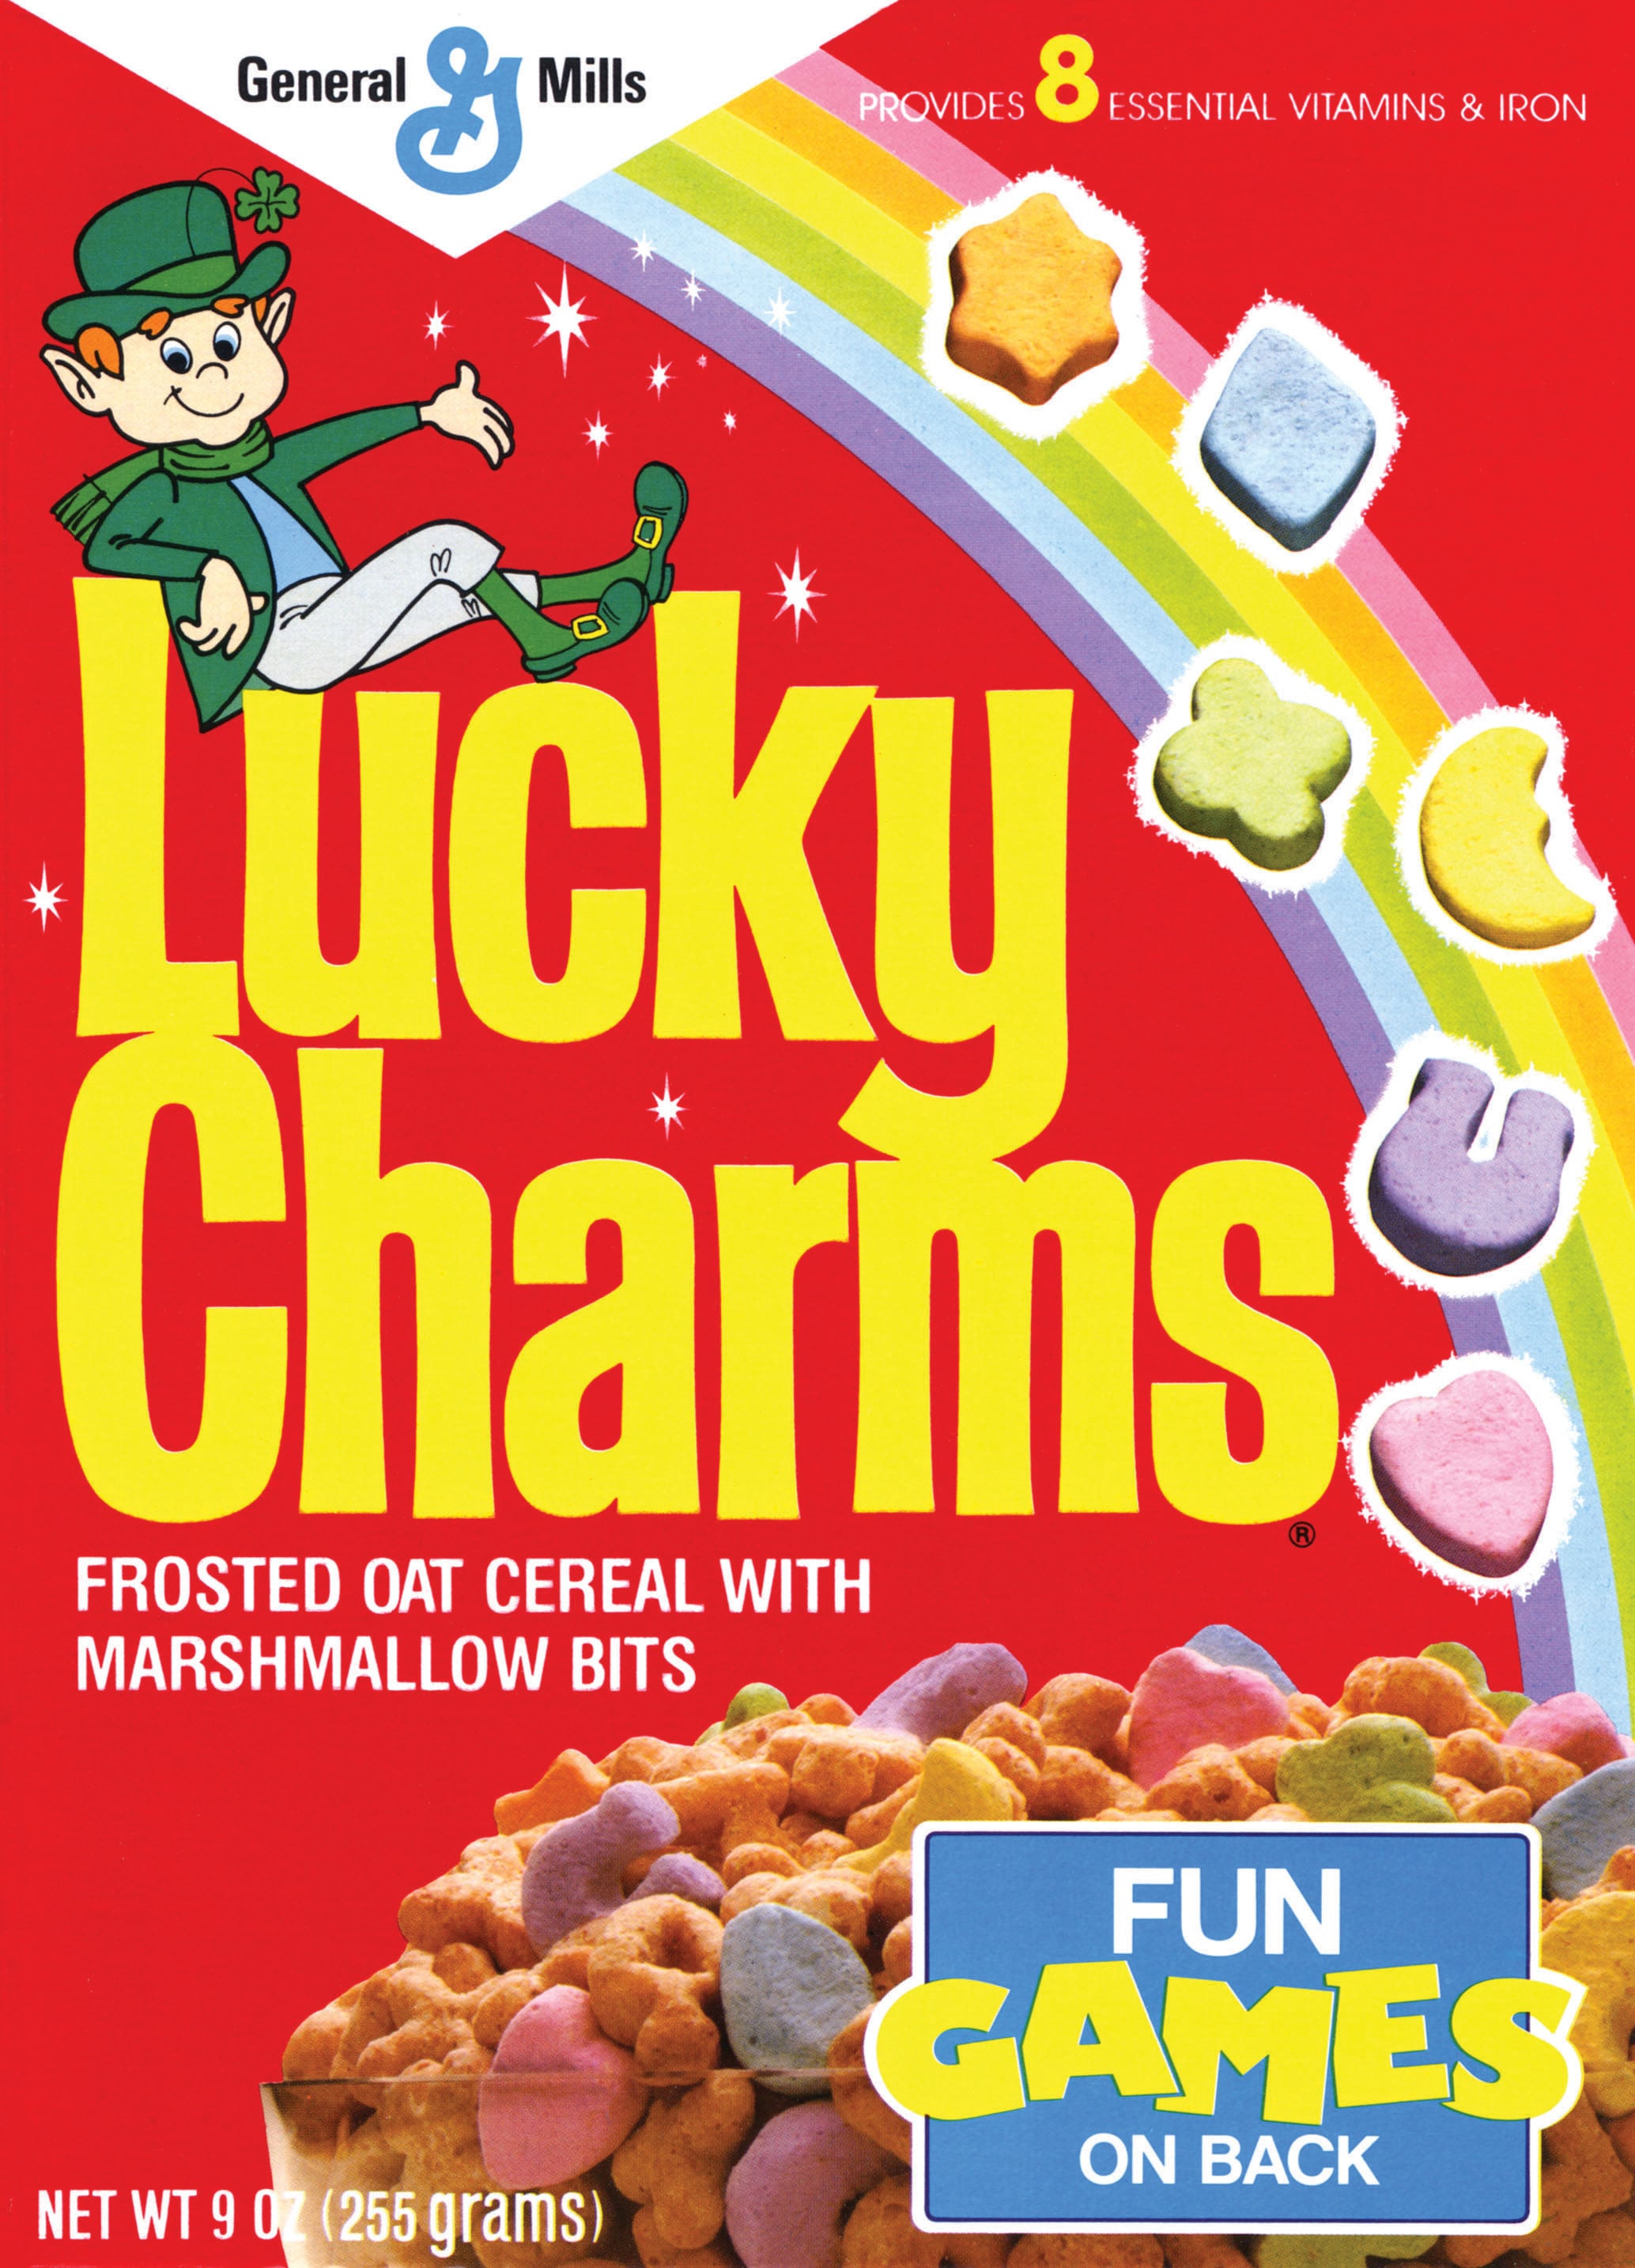 Critique : Céréales Lucky Charms